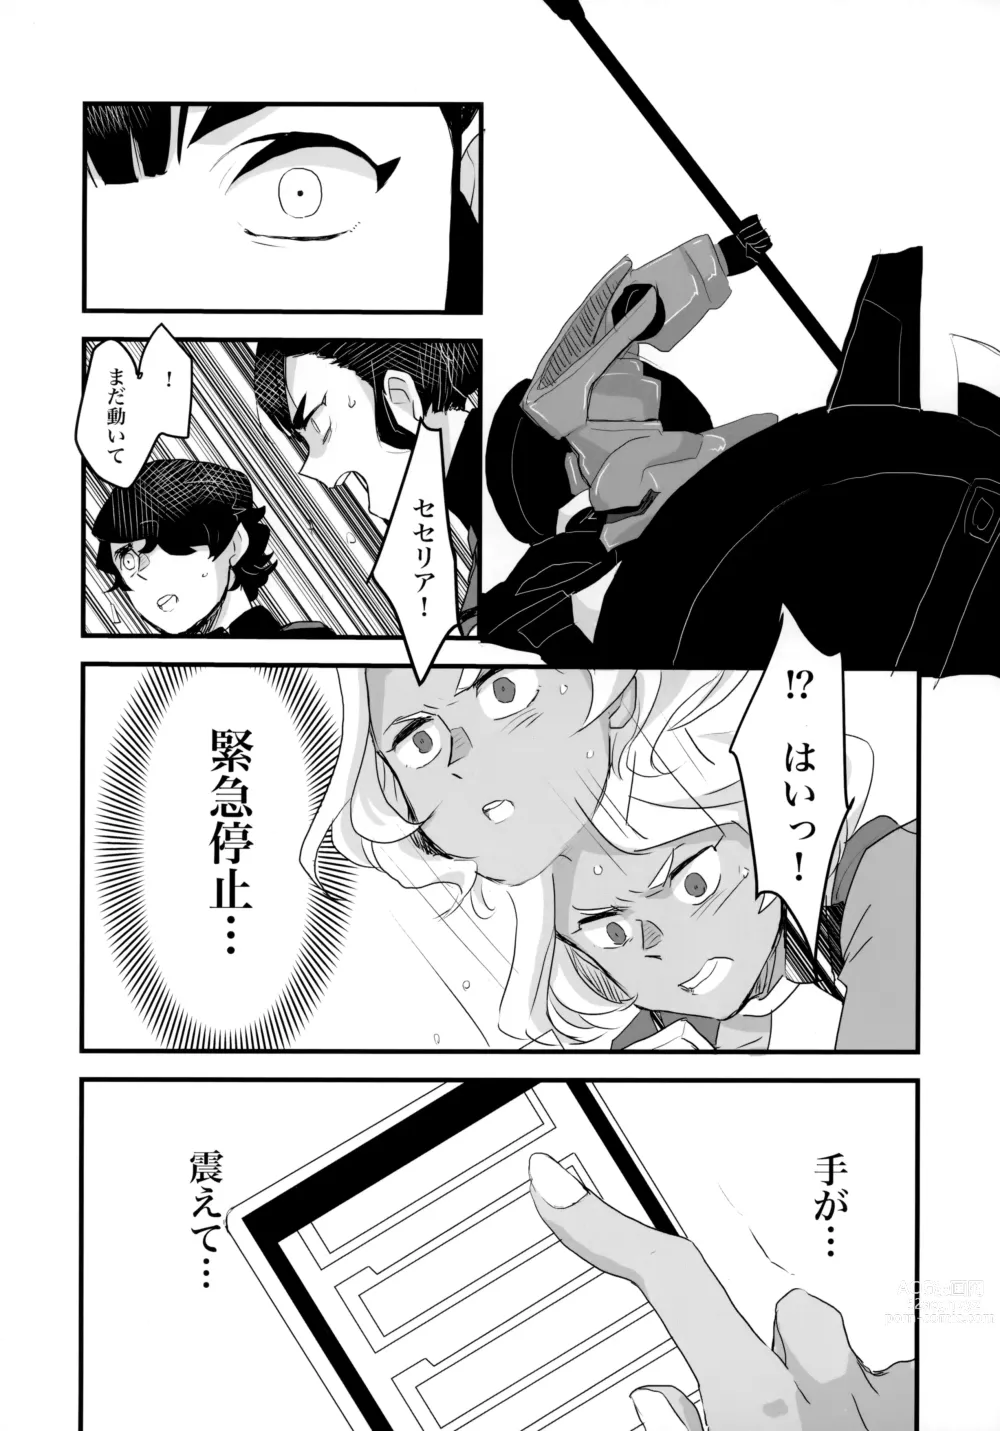 Page 52 of doujinshi Torikago